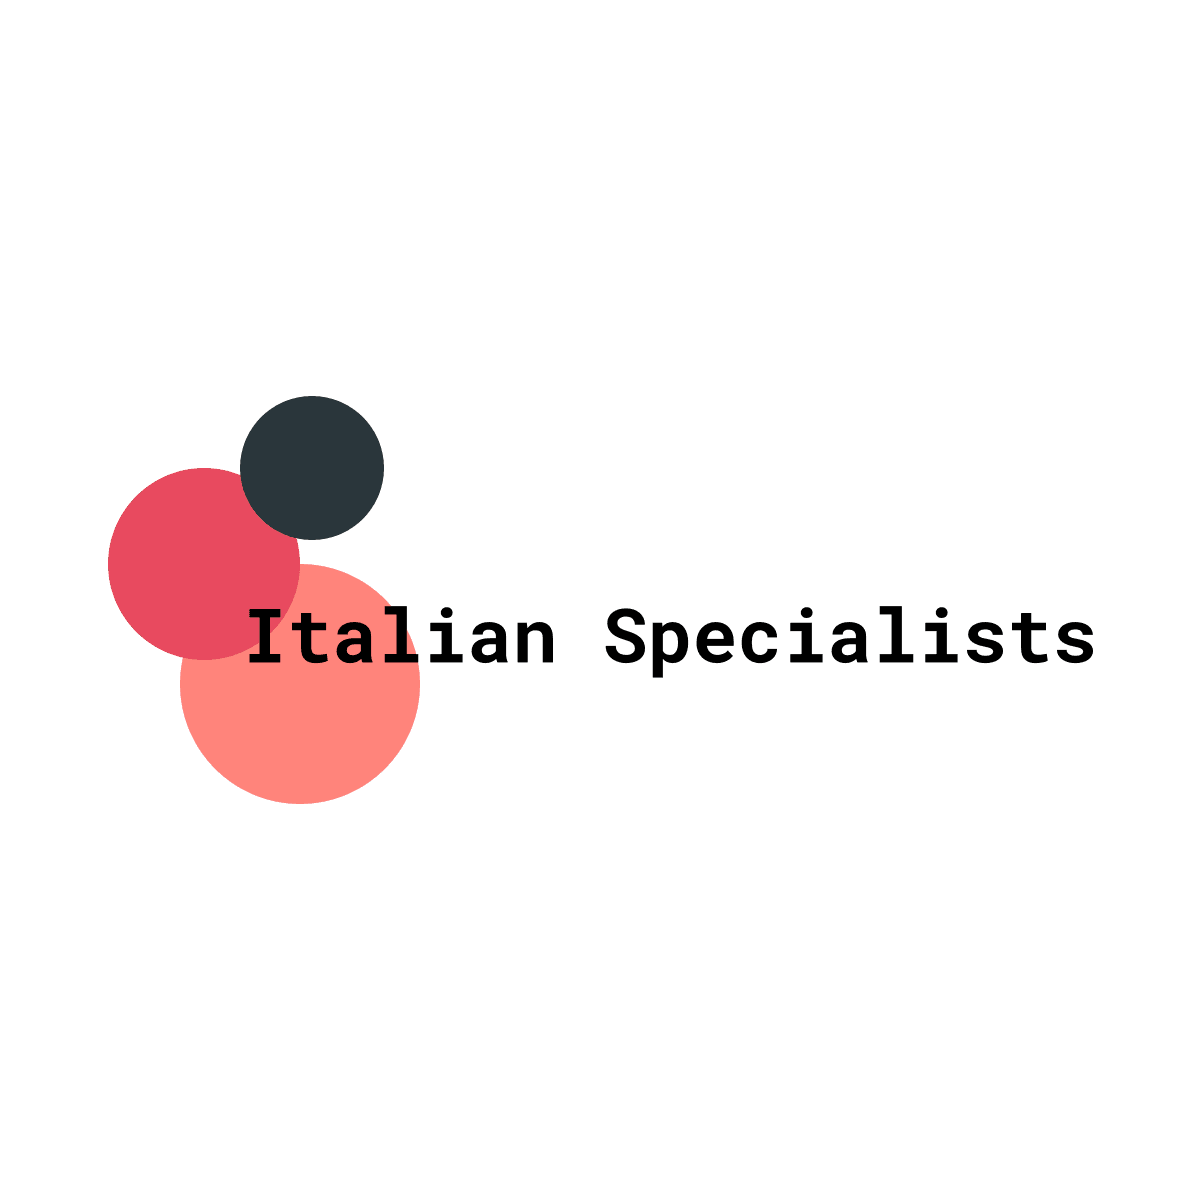 Italian Specialists